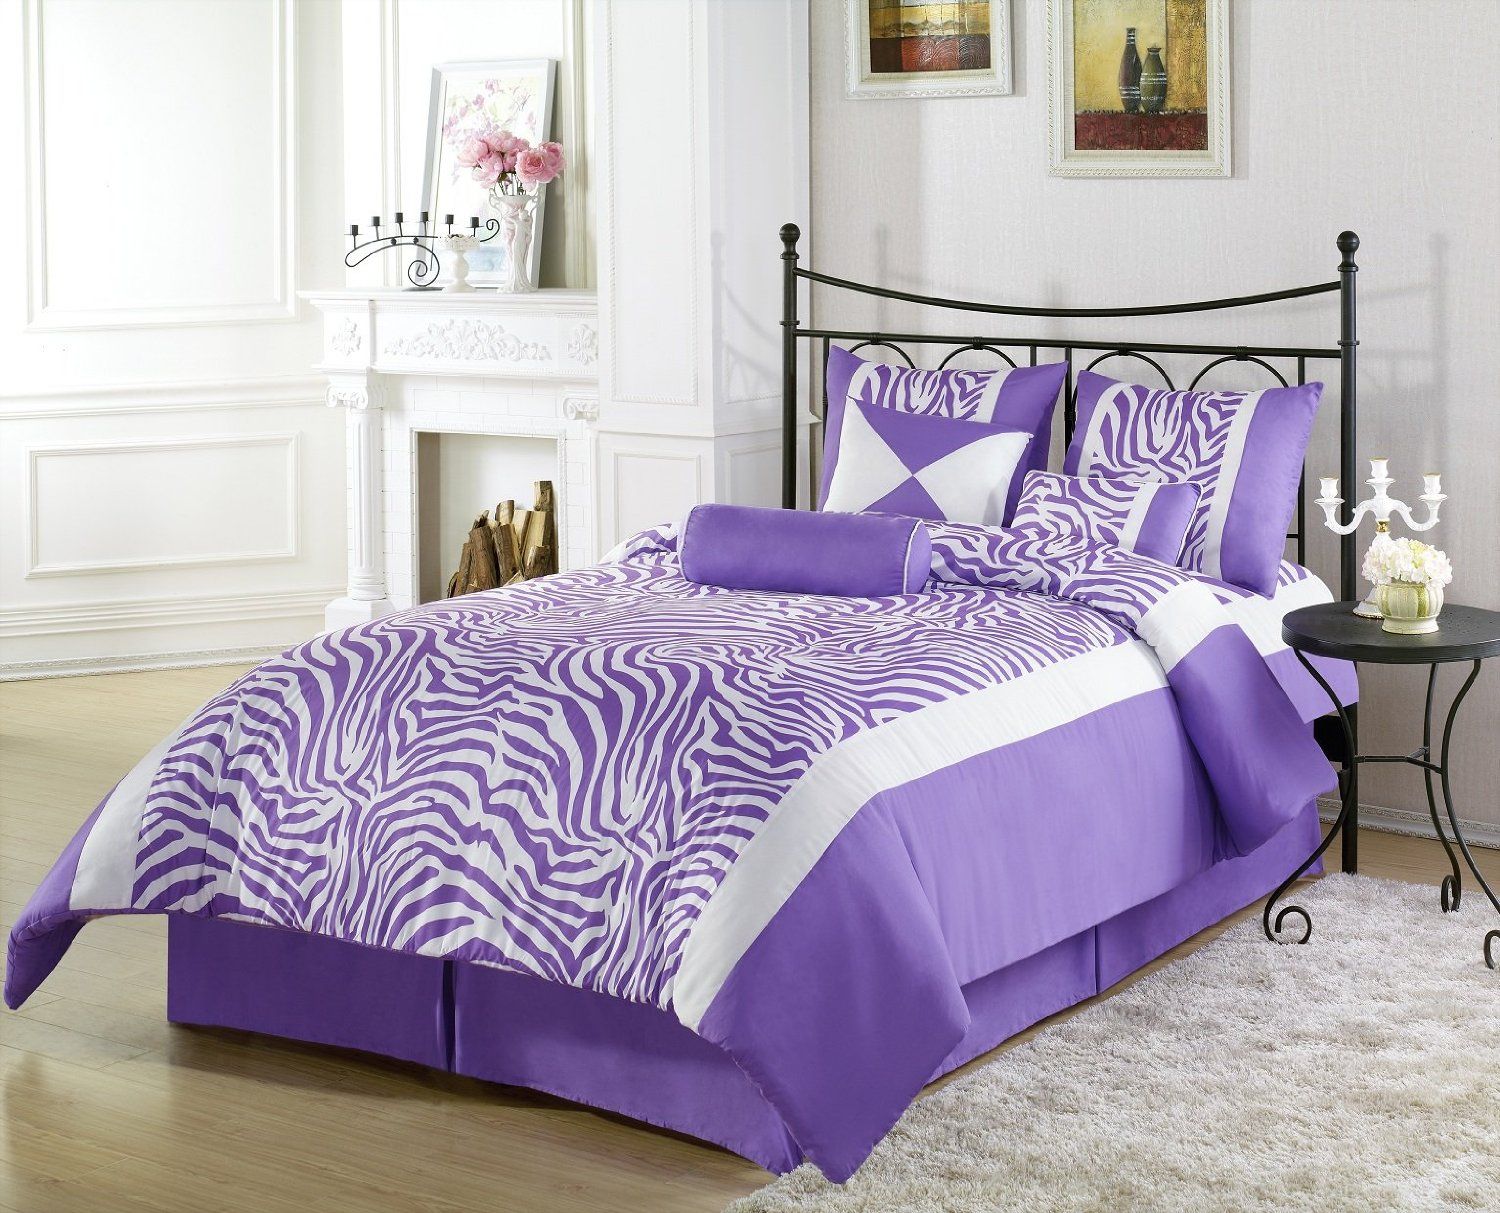 purple leopard print bedroom accessories photo - 9